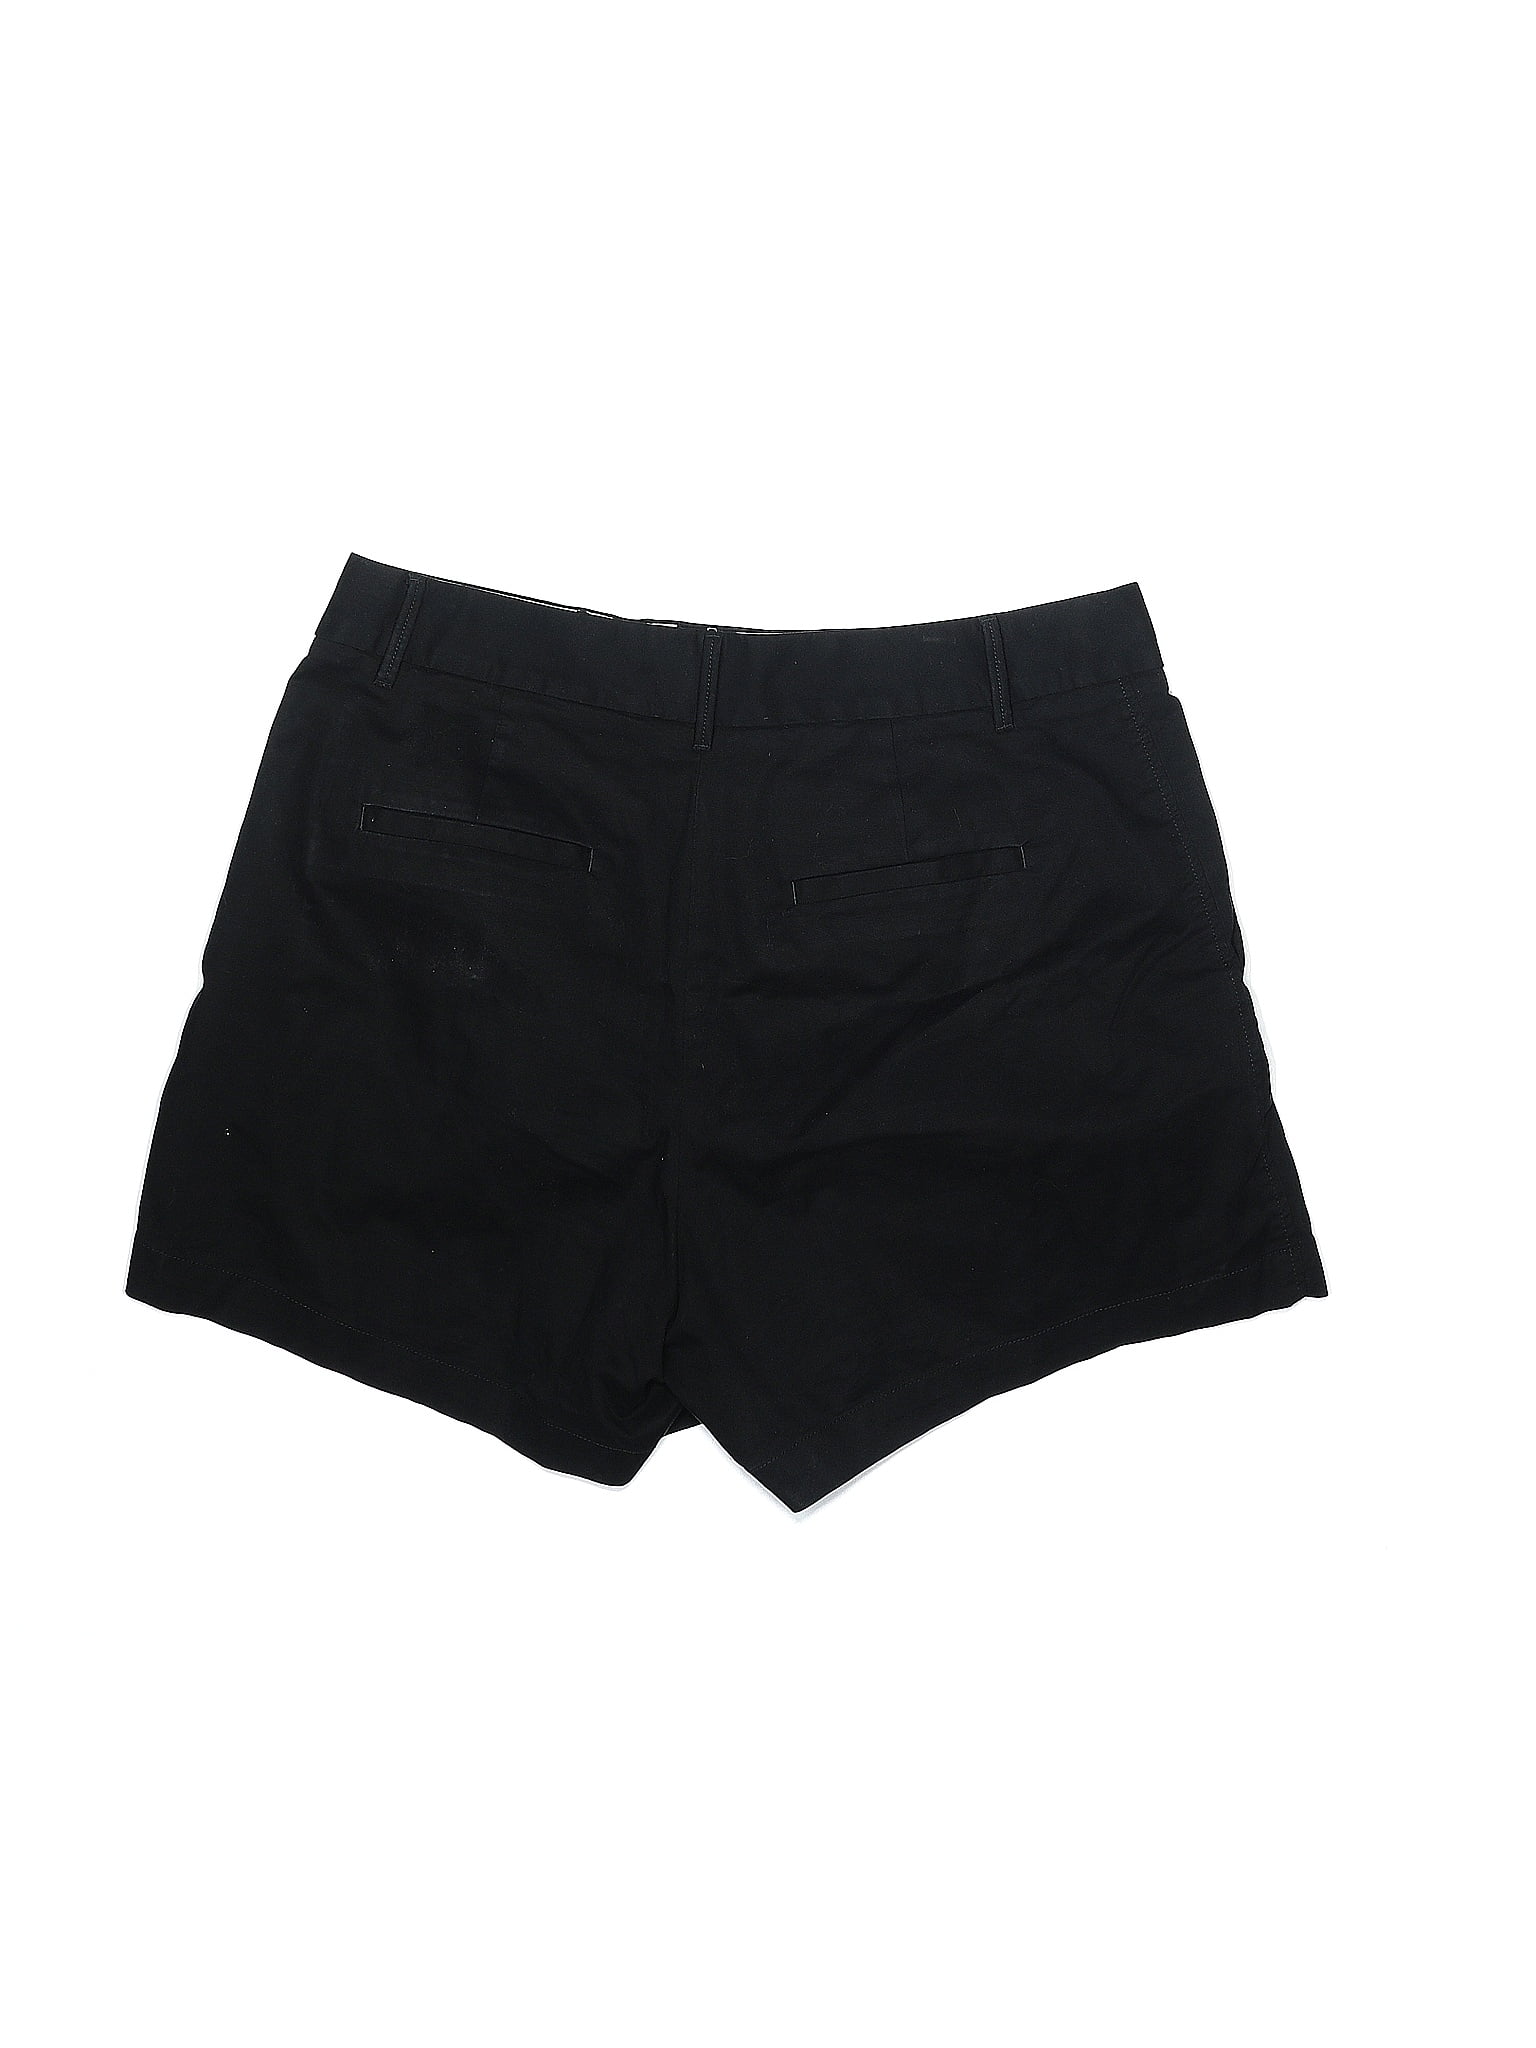 Gap Tailored Shorts, $39, Gap